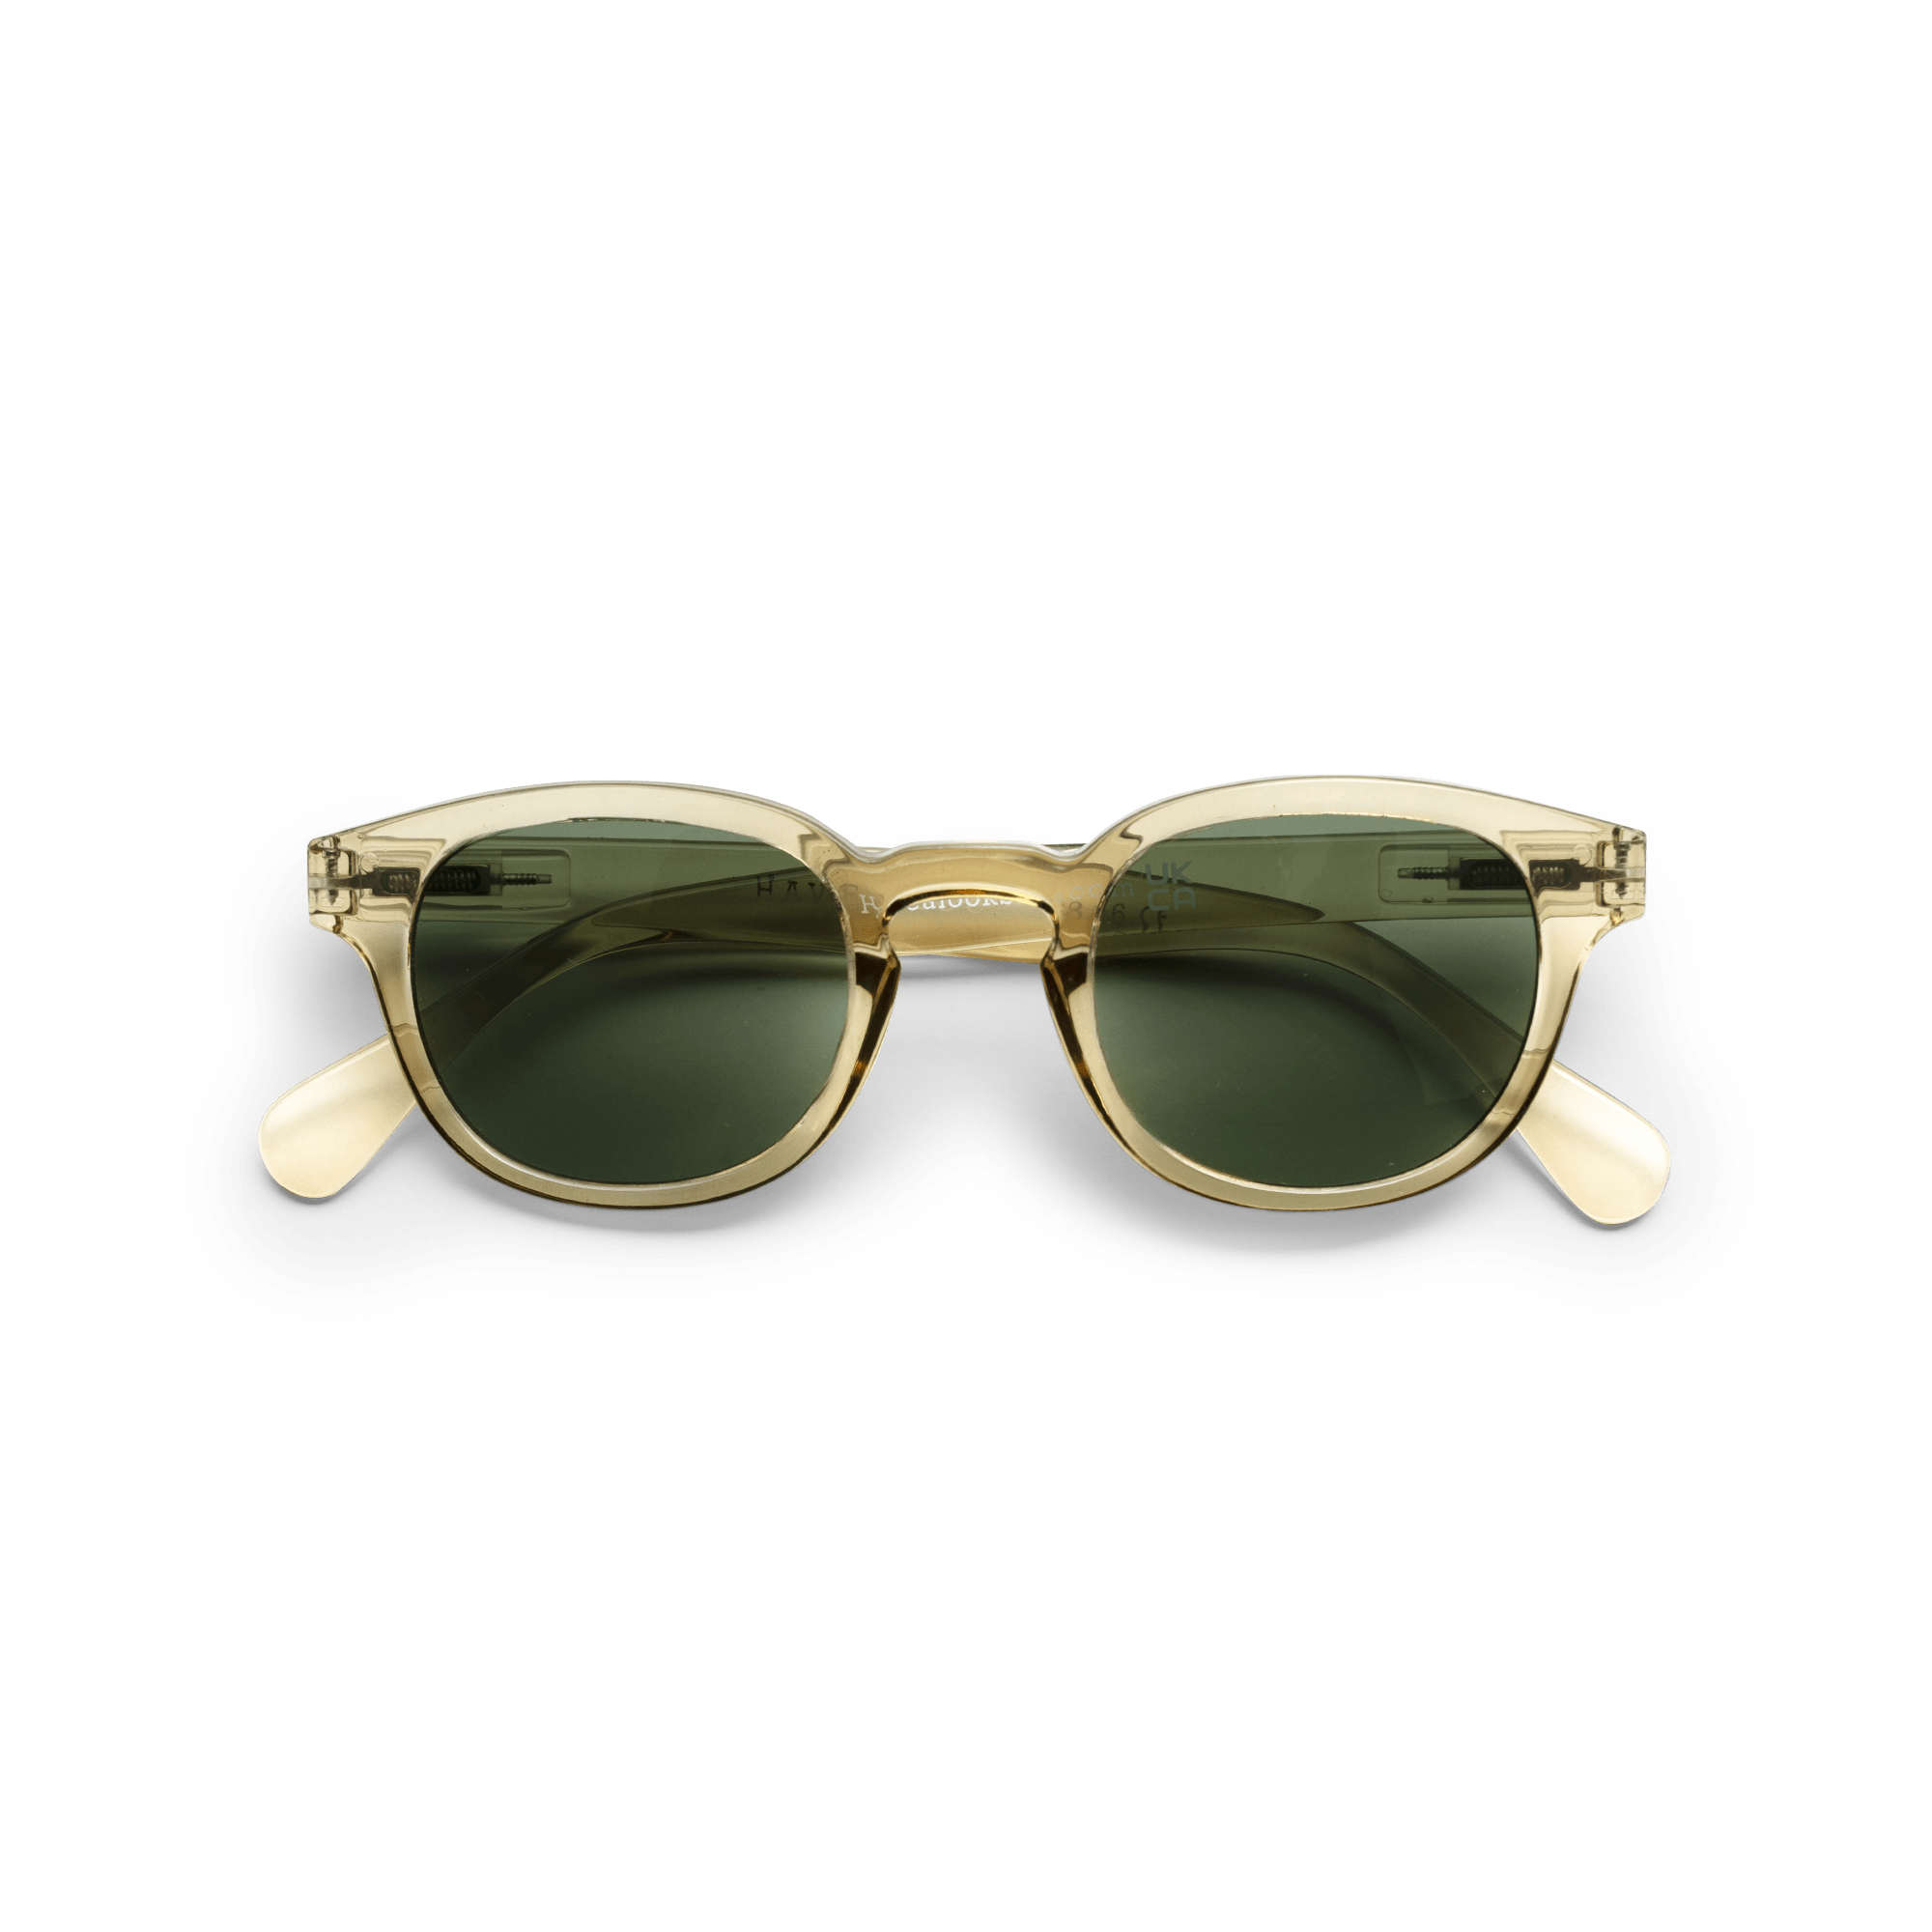 Sonnenbrillen Type C - olive aus Have A Look